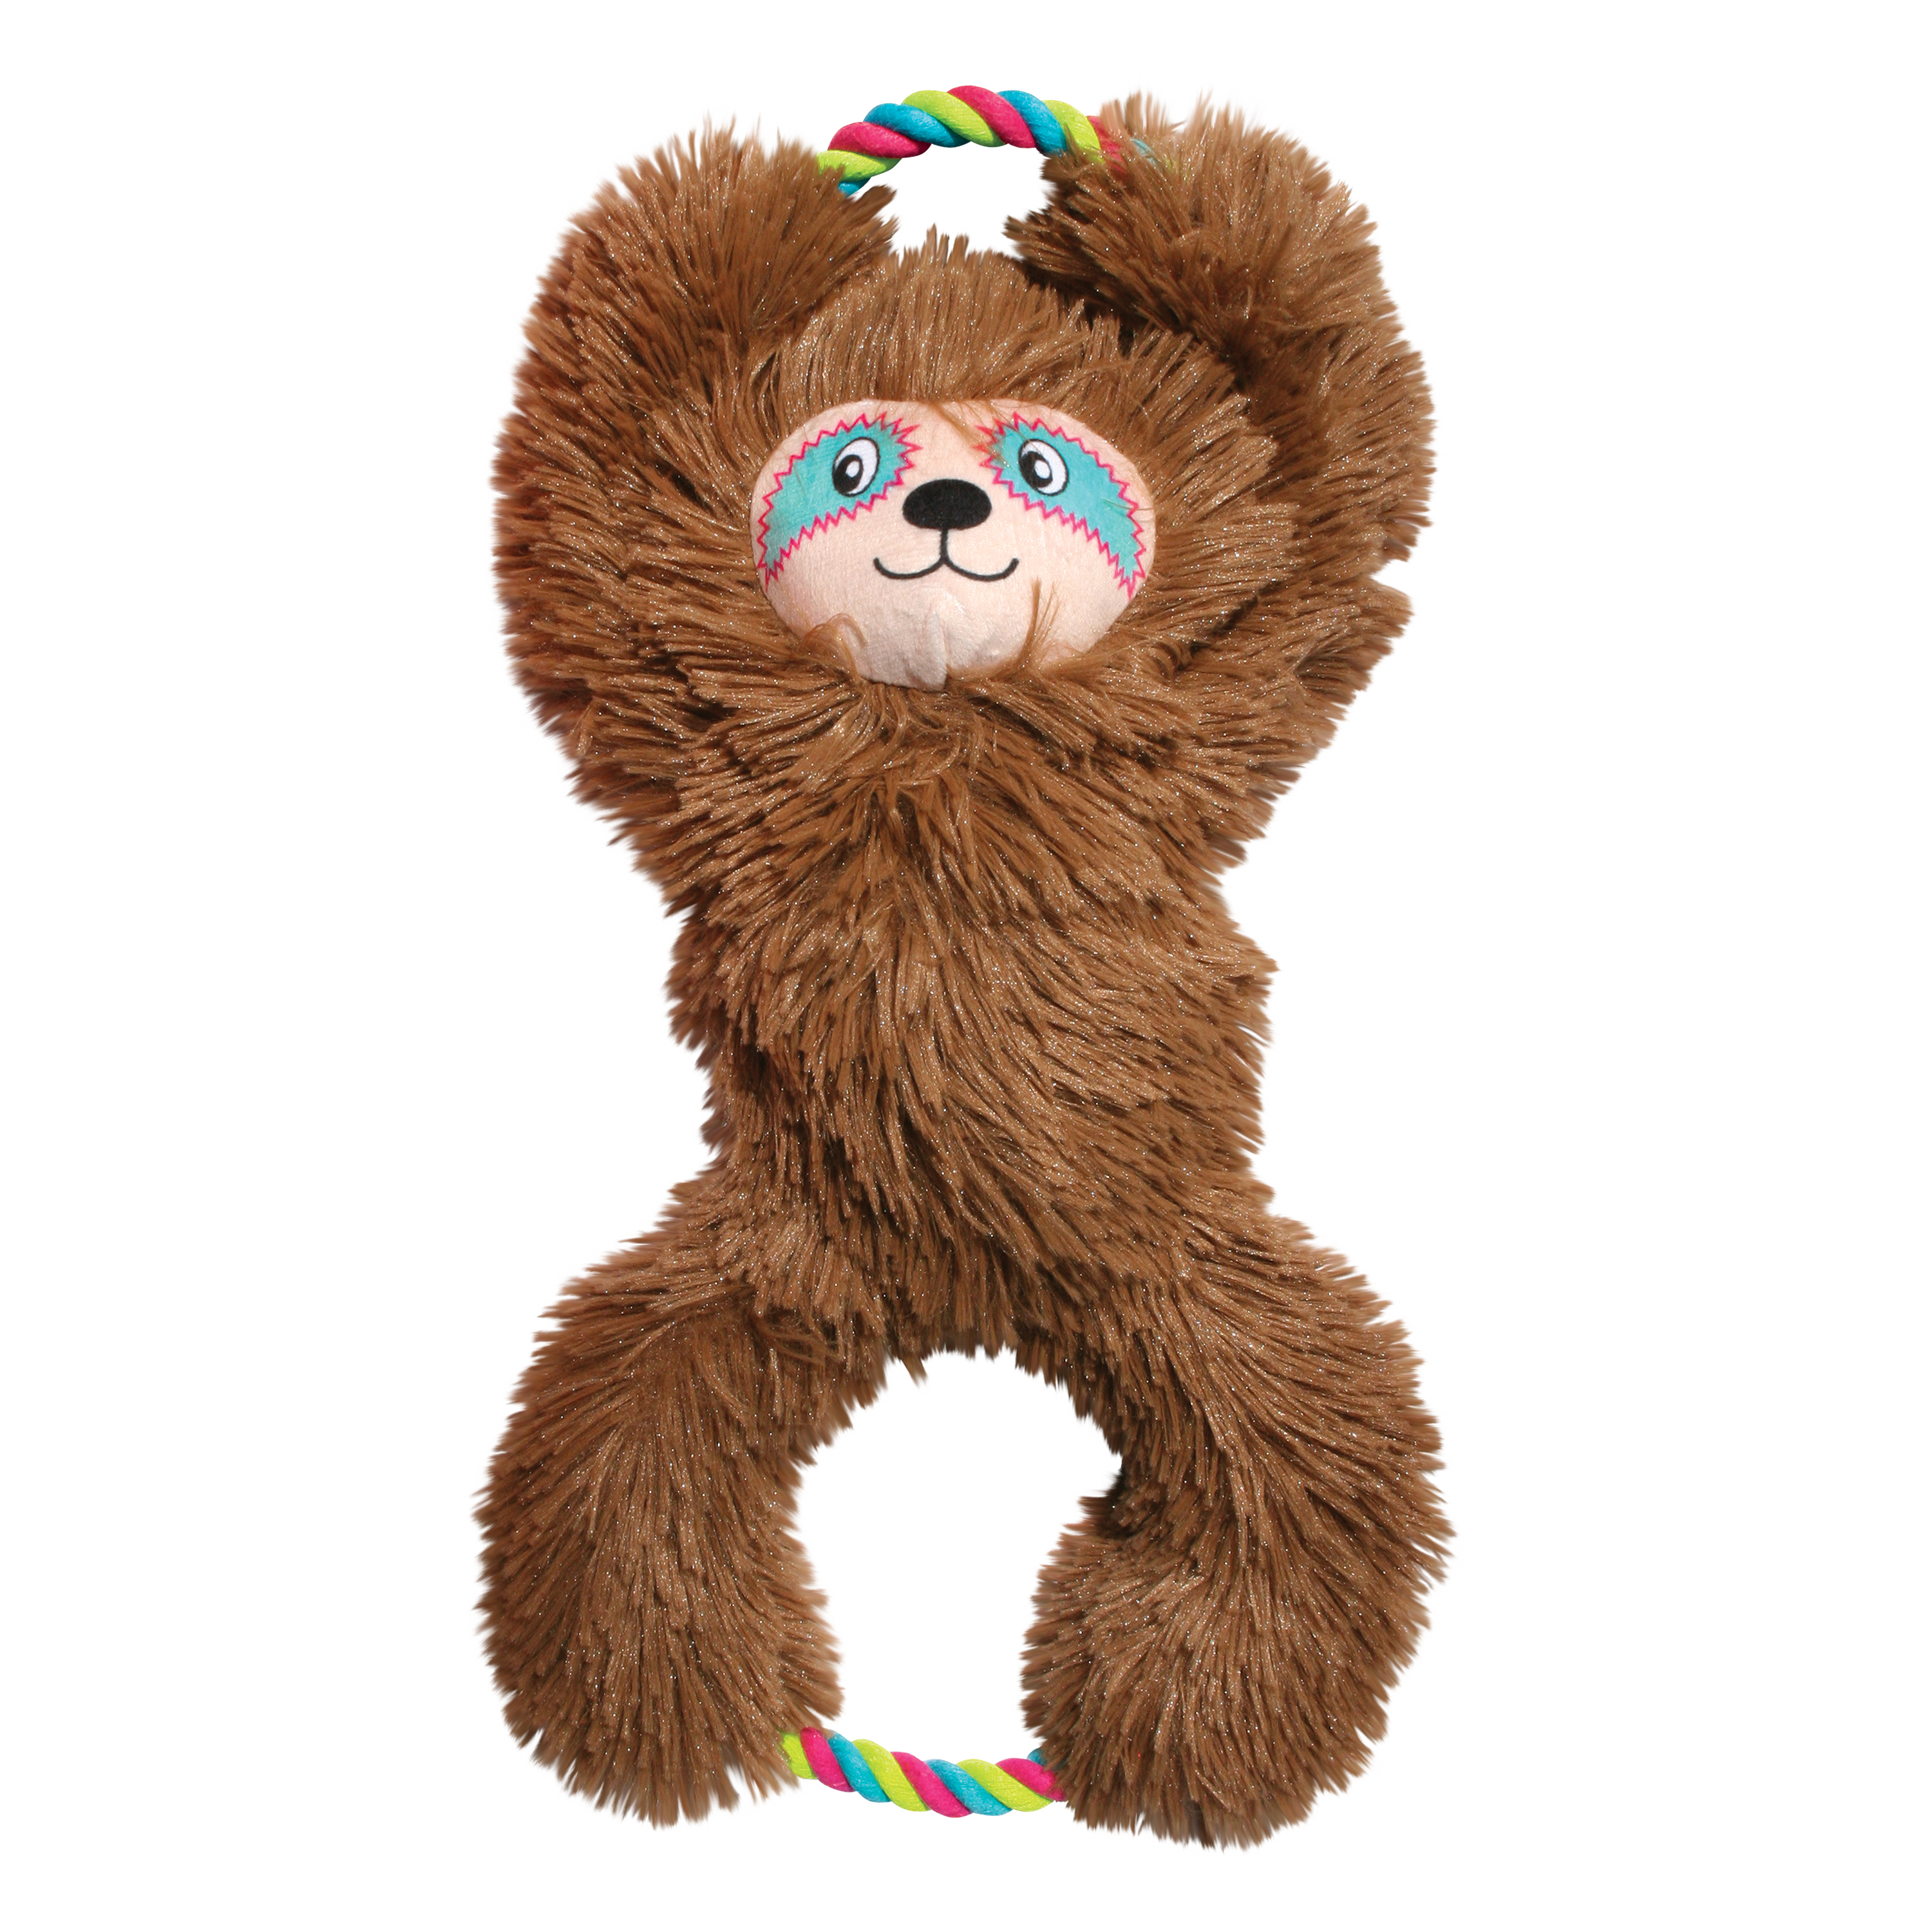 Tuggz Sloth offpack product image